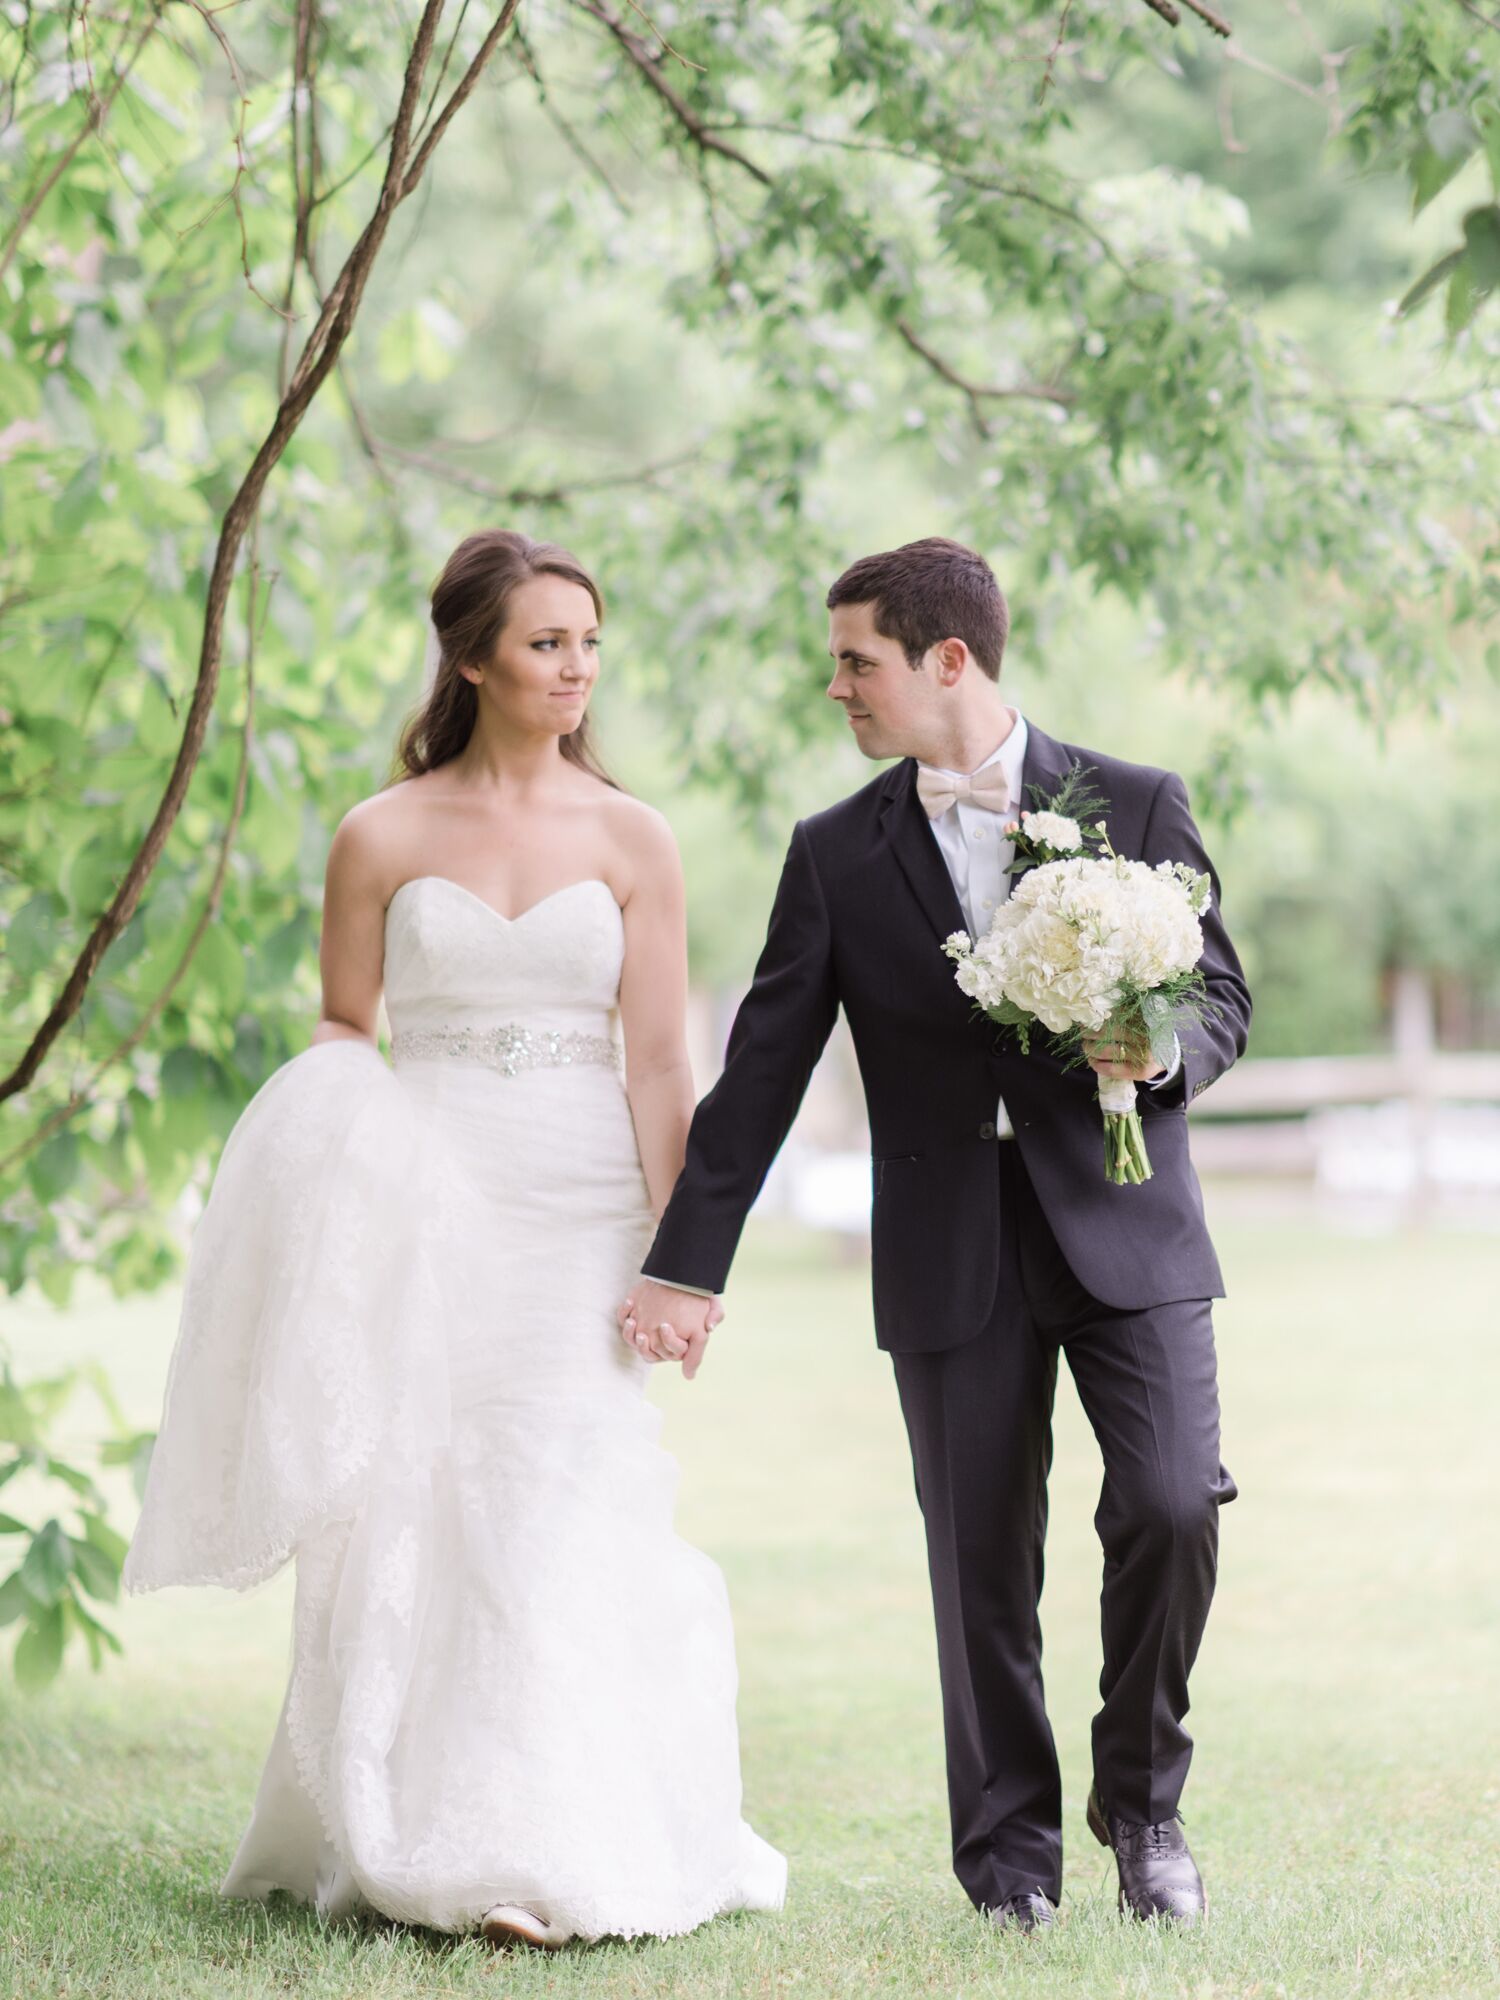 A Romantic Rustic Wedding  at Creekwood Gardens in Rogers  